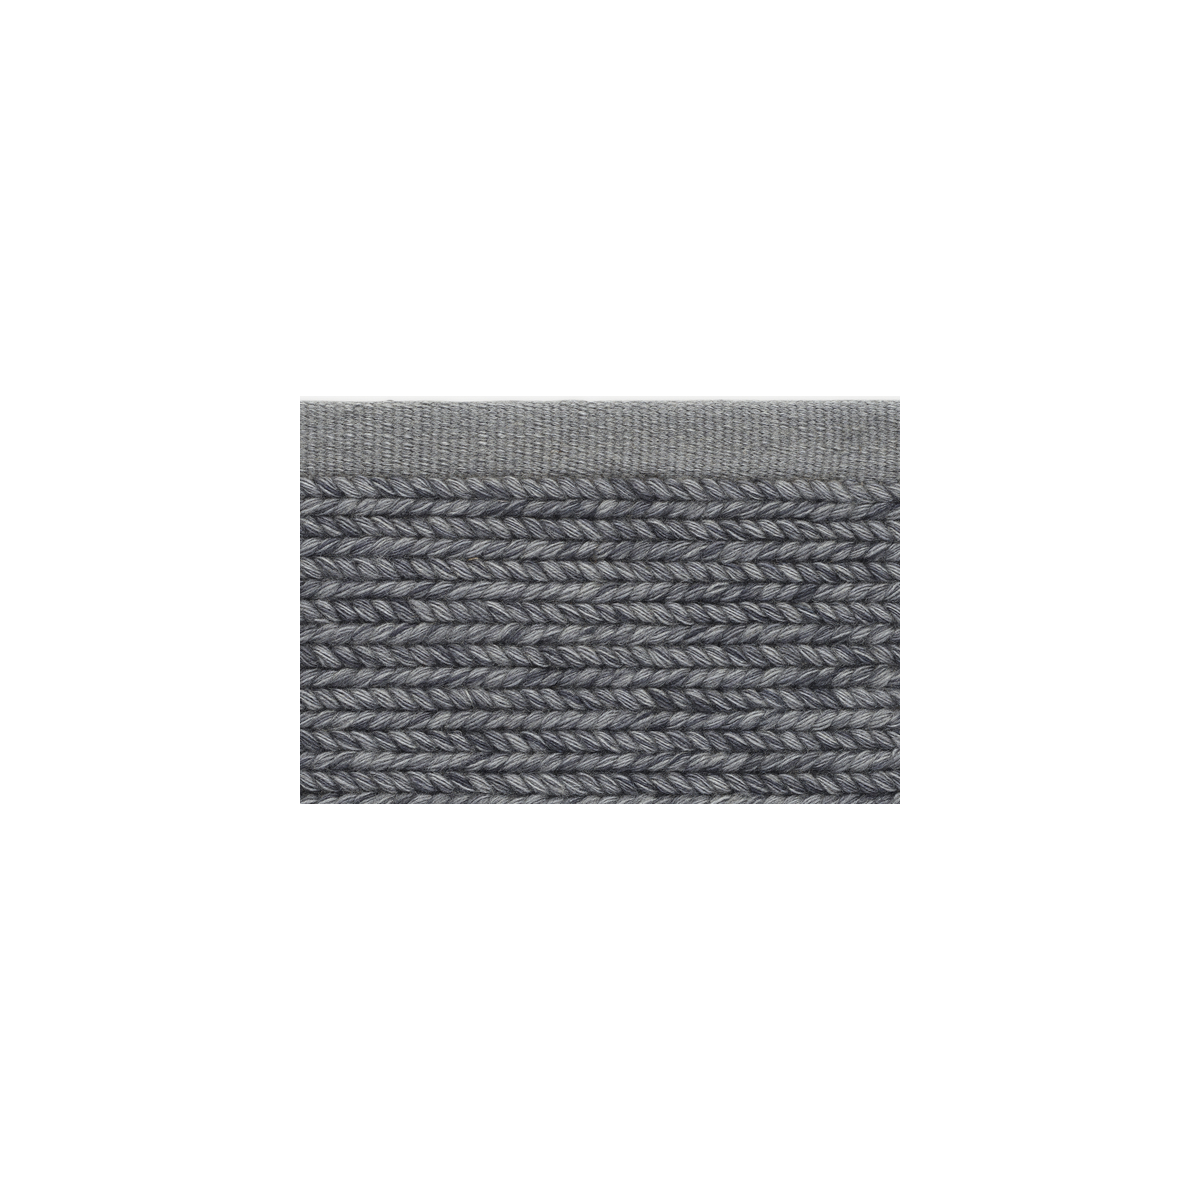 200x300cm - 0x04 - Aram rug